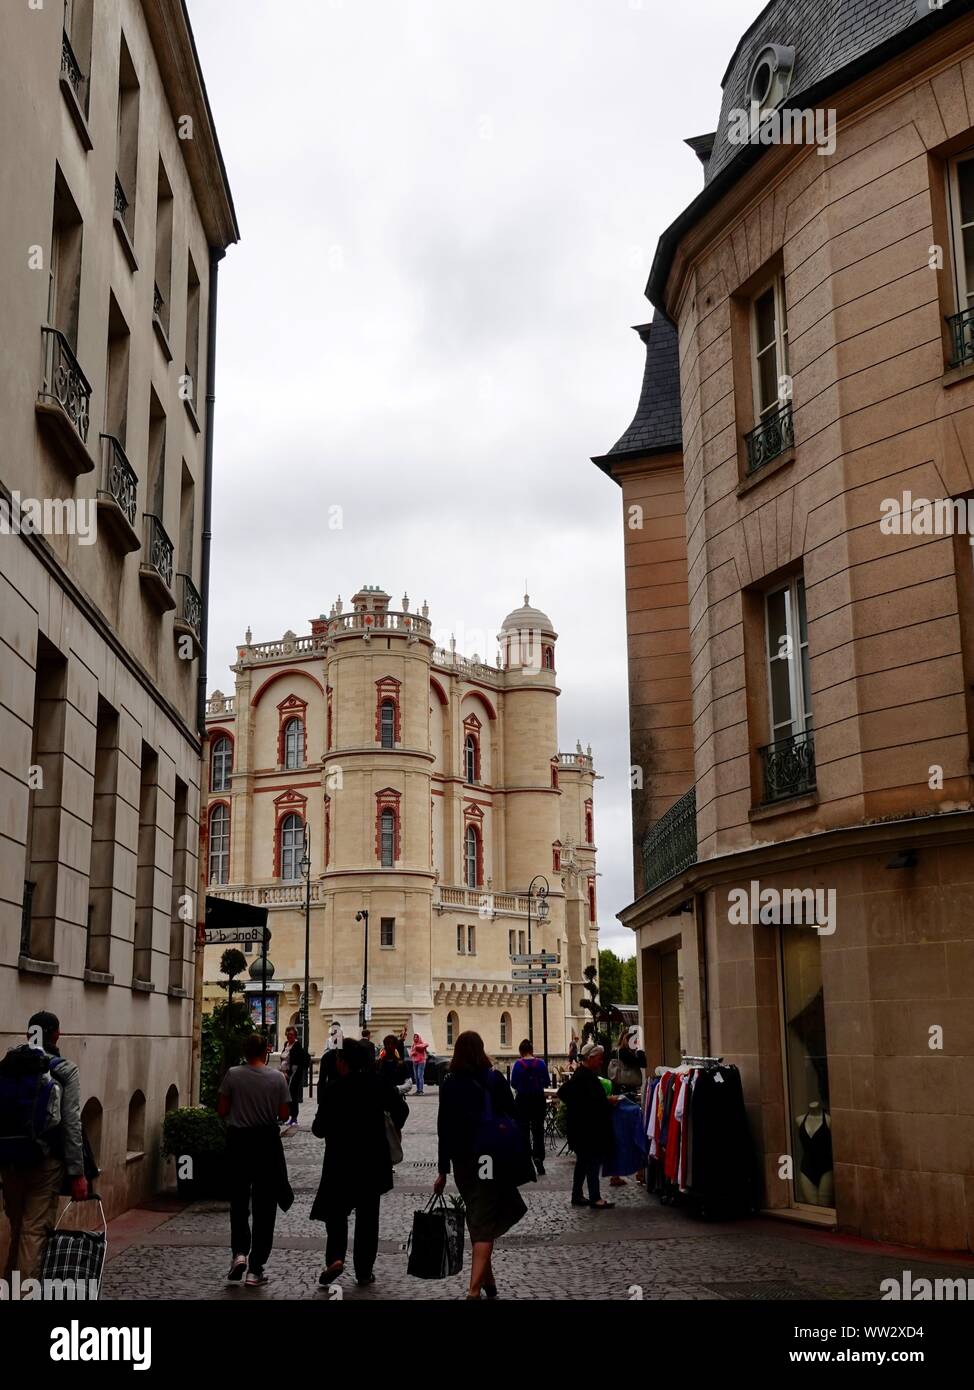 Shoppers, people, walking in the pedestrian area towards the Chateau, Saint-Germain-en-Laye, France. Stock Photo